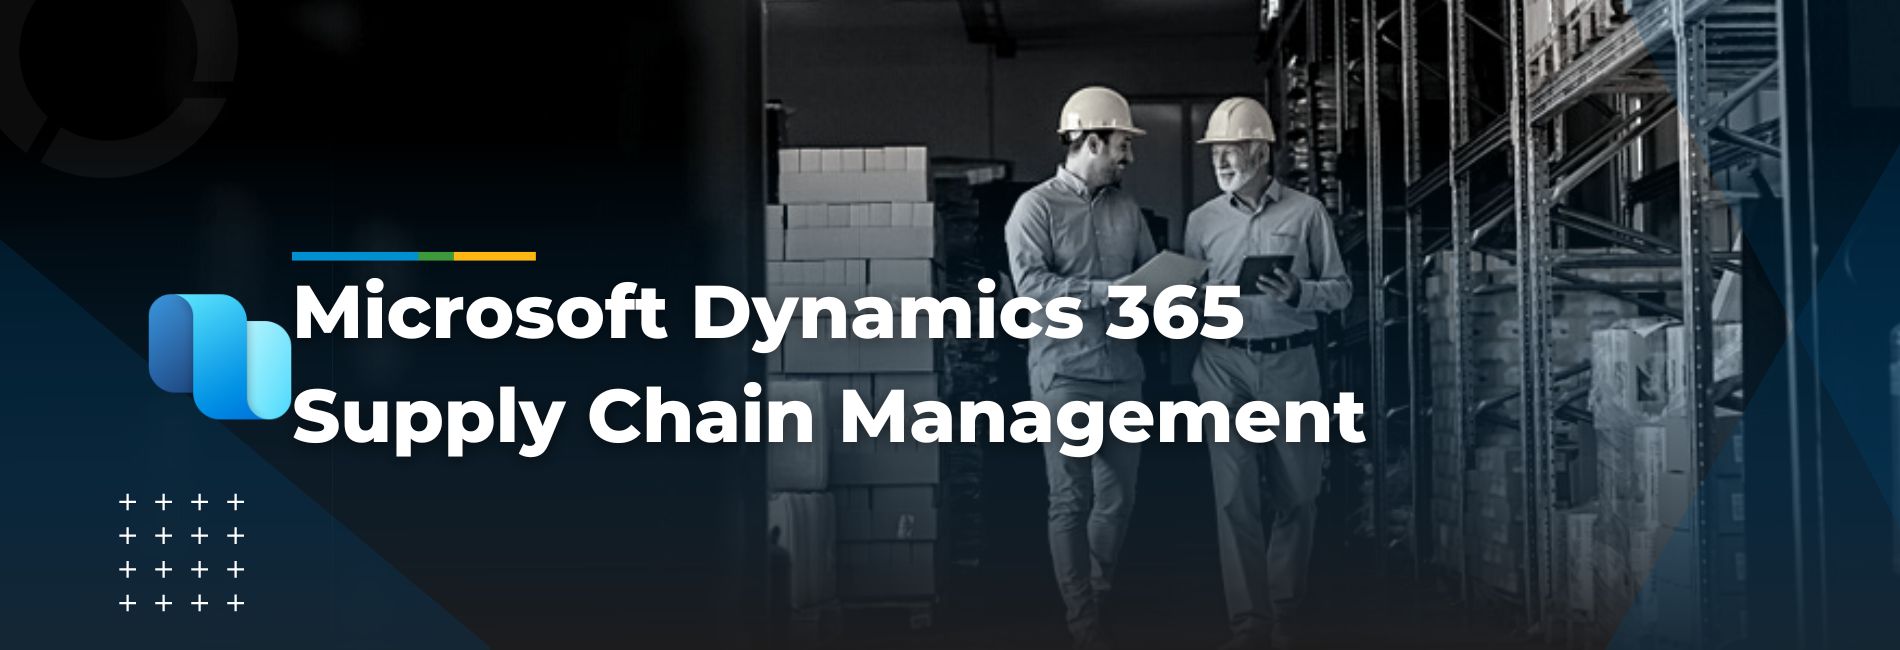 Banner do Dynamics 365 Supply Chain Management